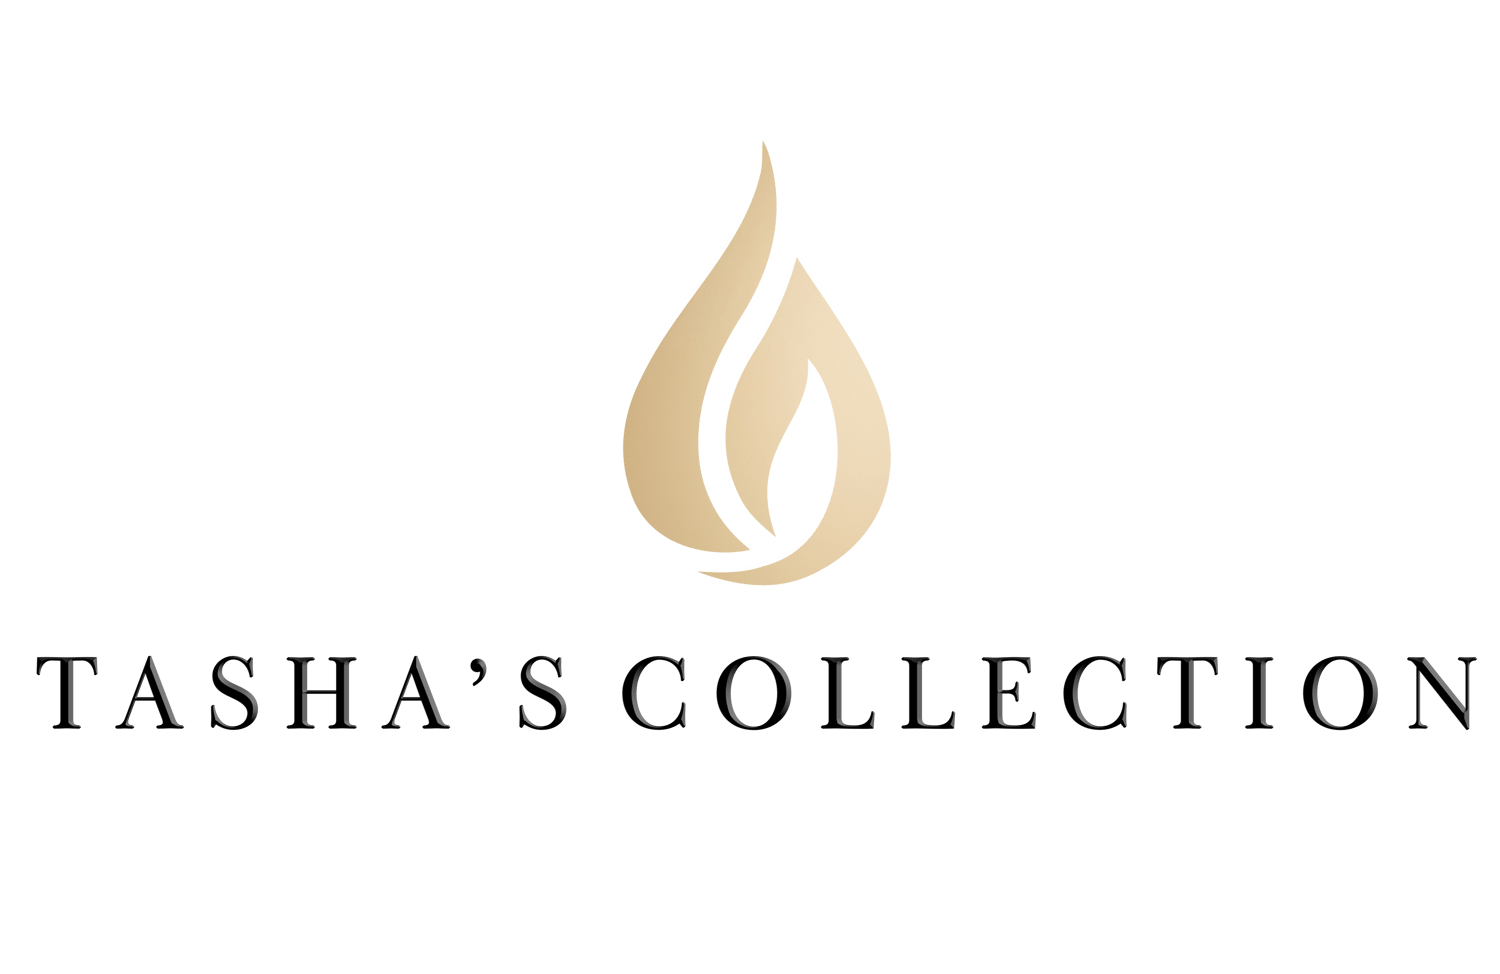 Tasha's Collection store logo